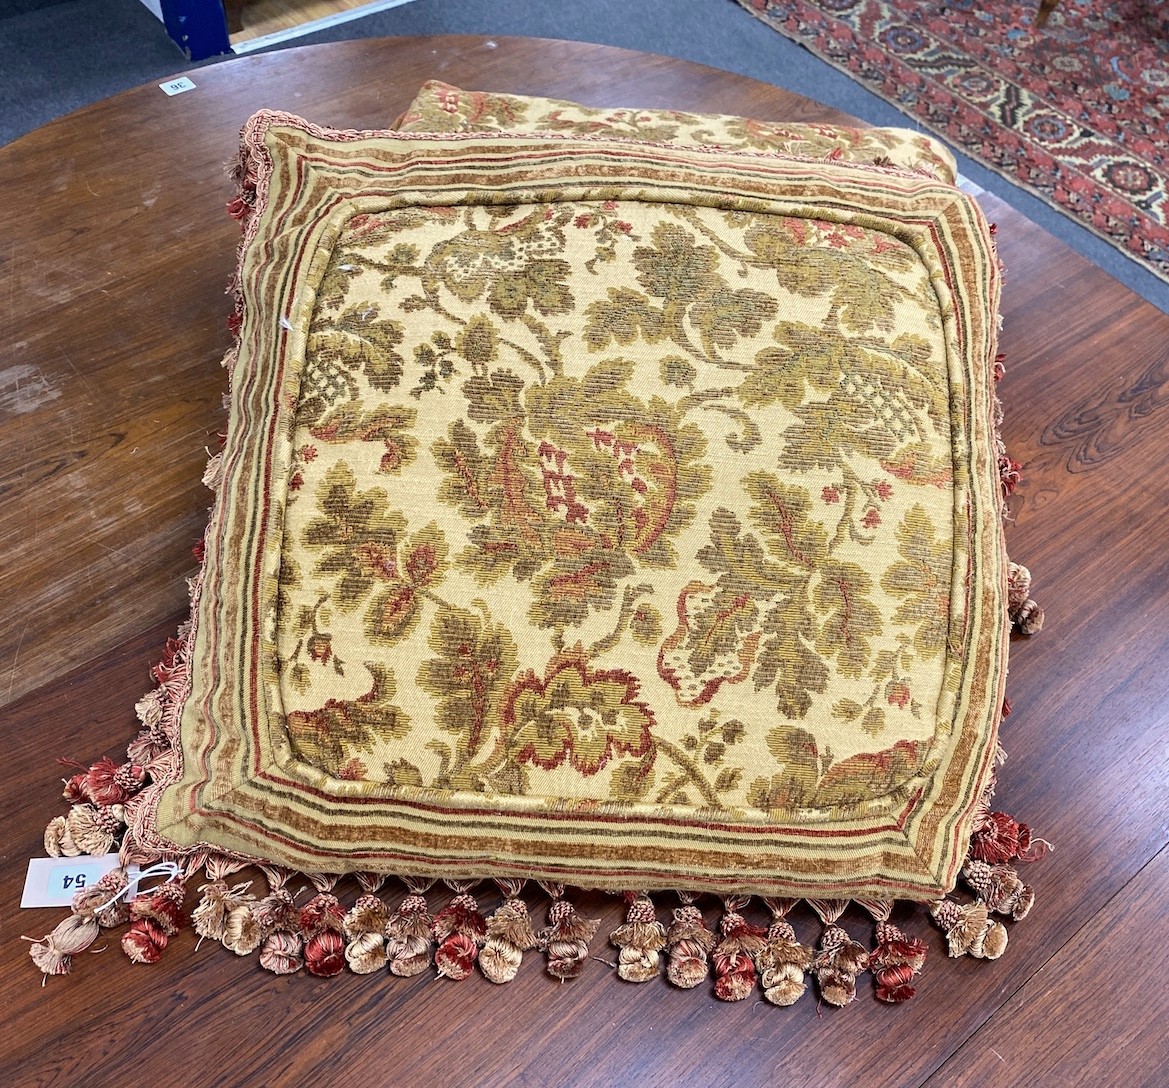 Three square tasselled cushions 56cm - Image 3 of 4